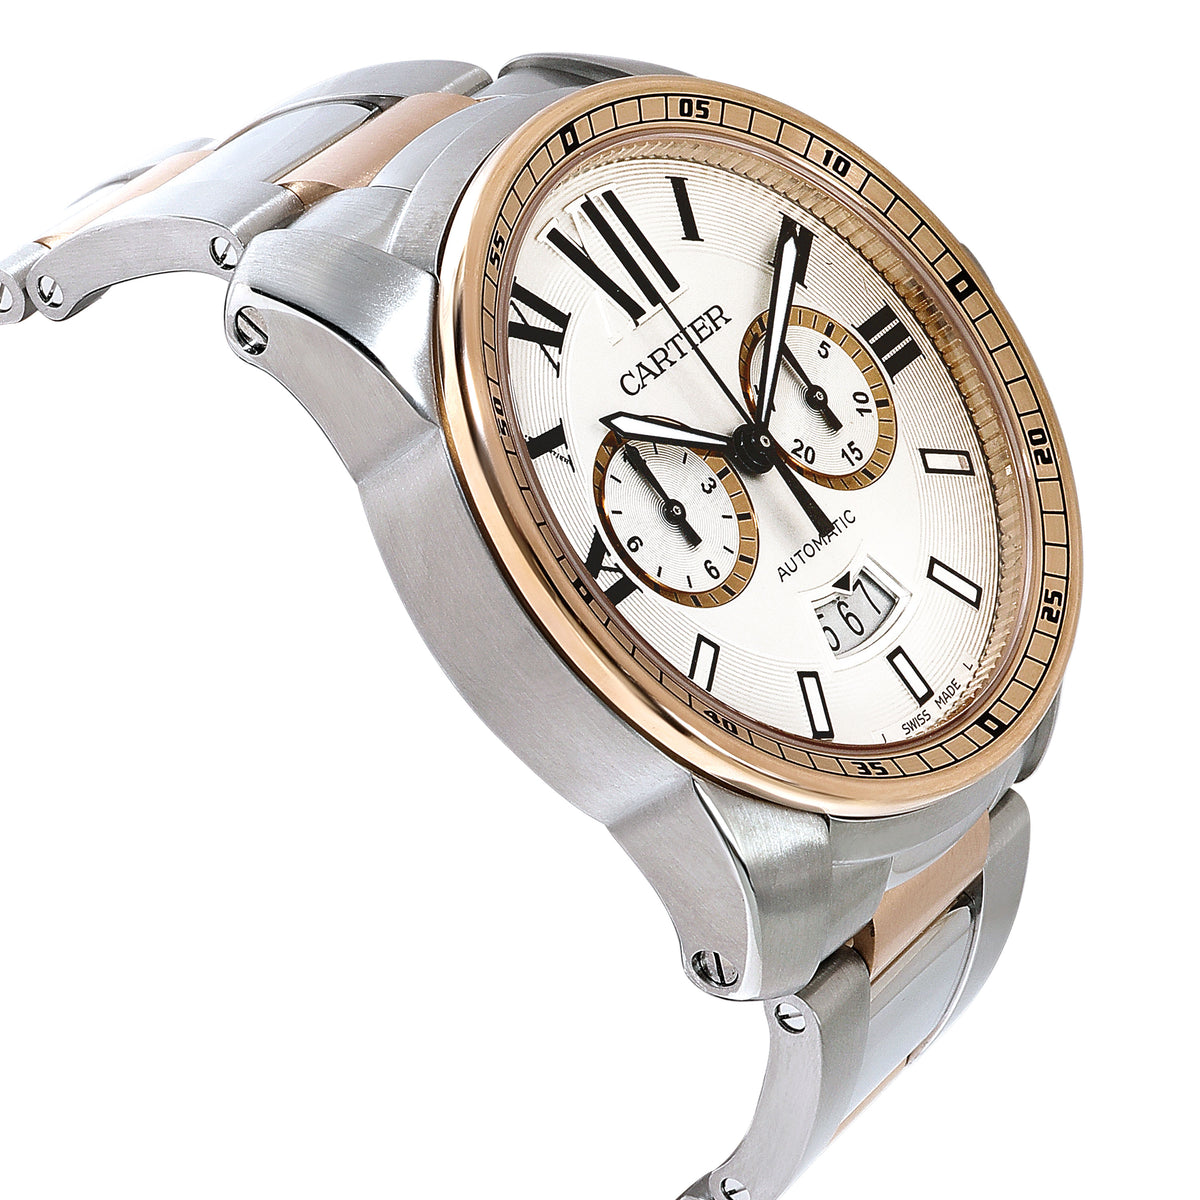 Cartier Calibre de Cartier W7100042 Men's Watch in 18kt Stainless Steel/Rose Gol